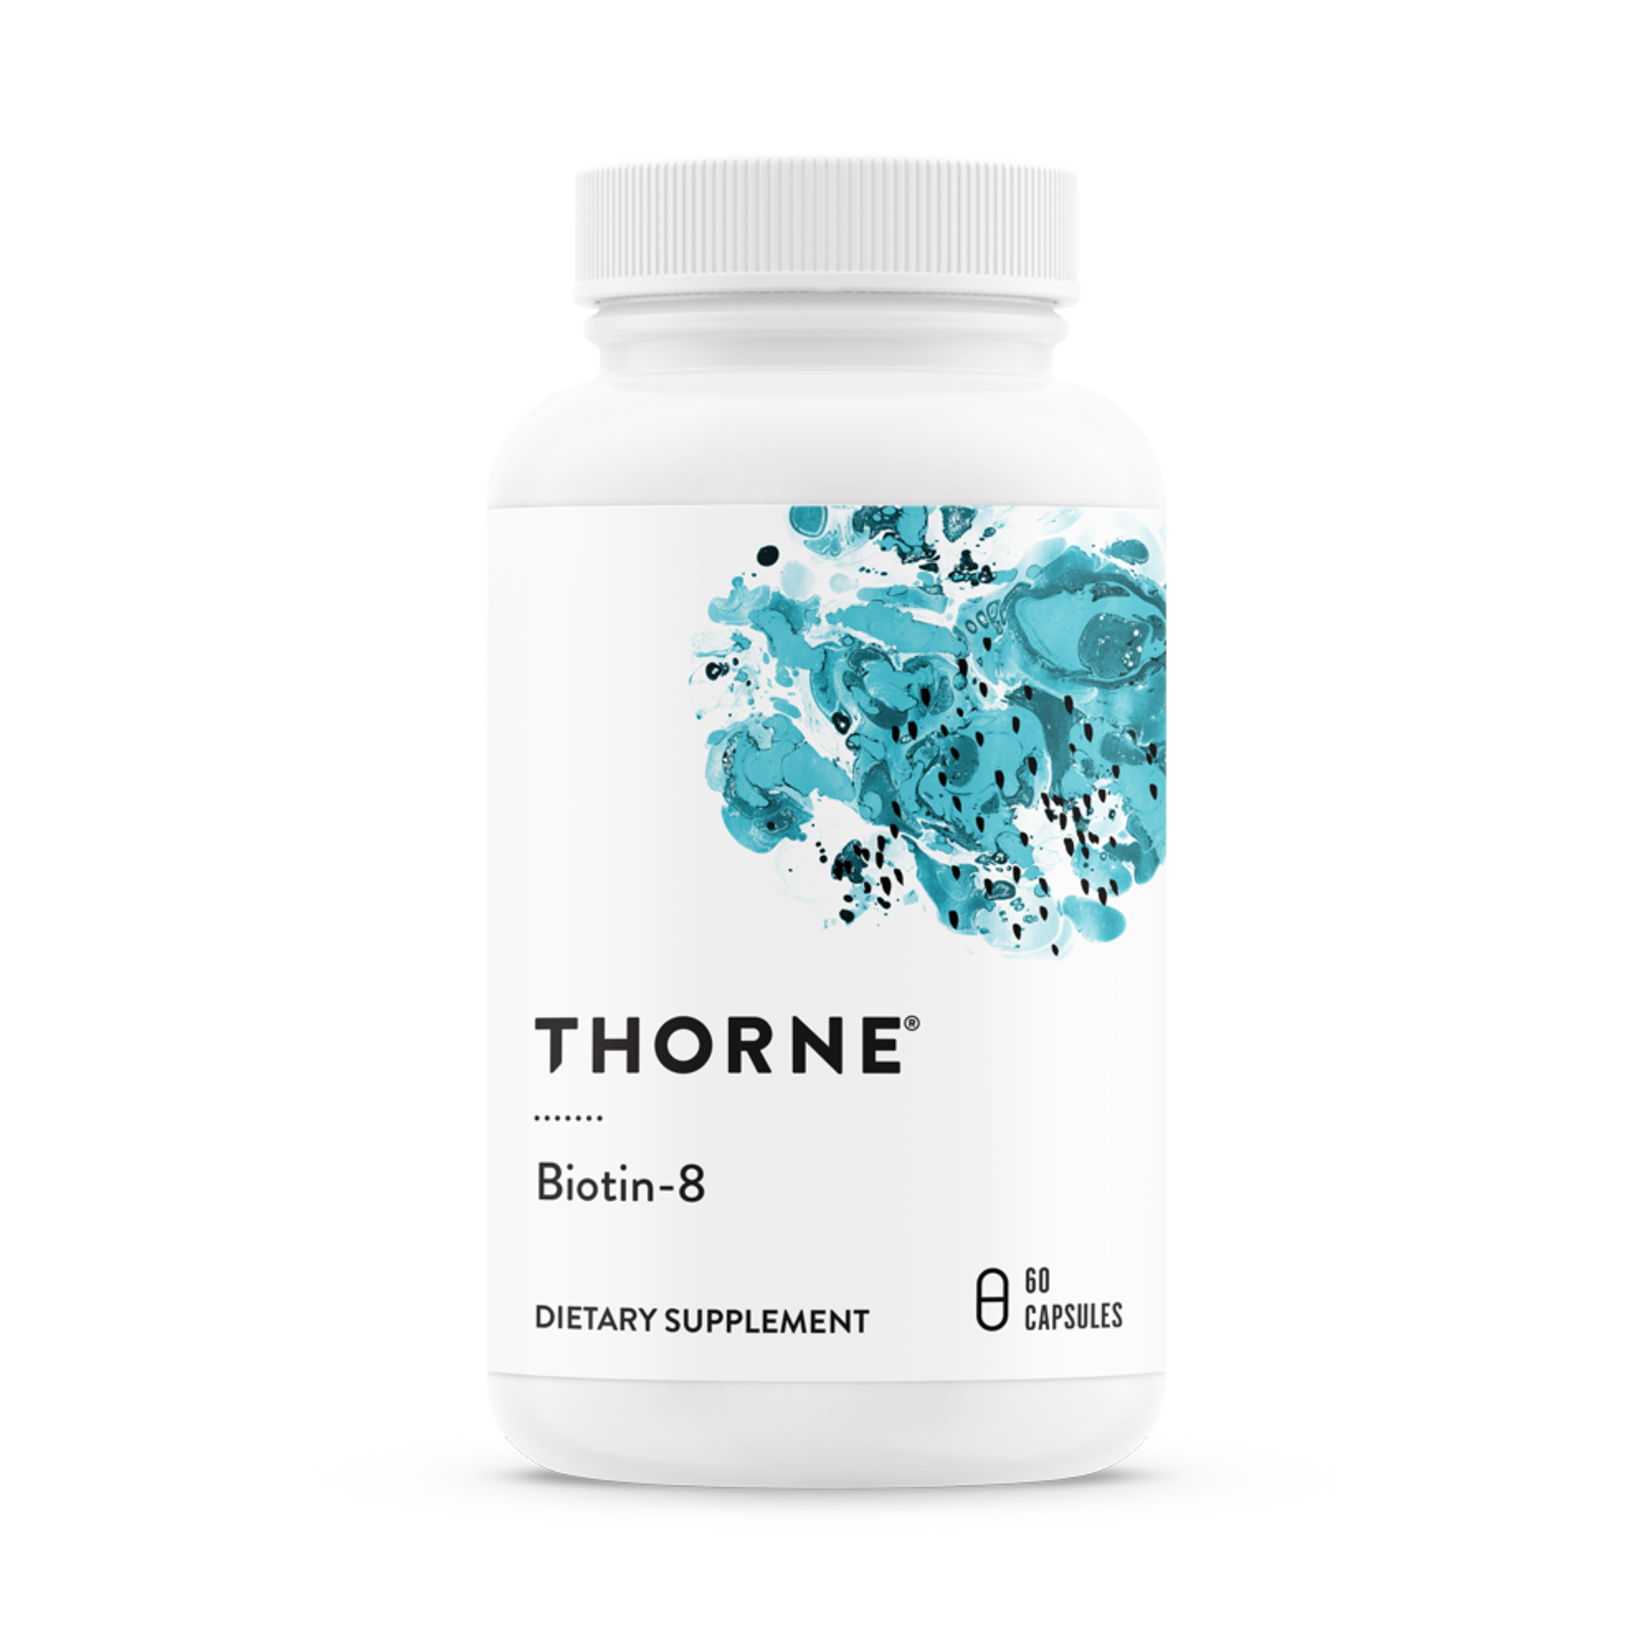 Thorne Biotin-8